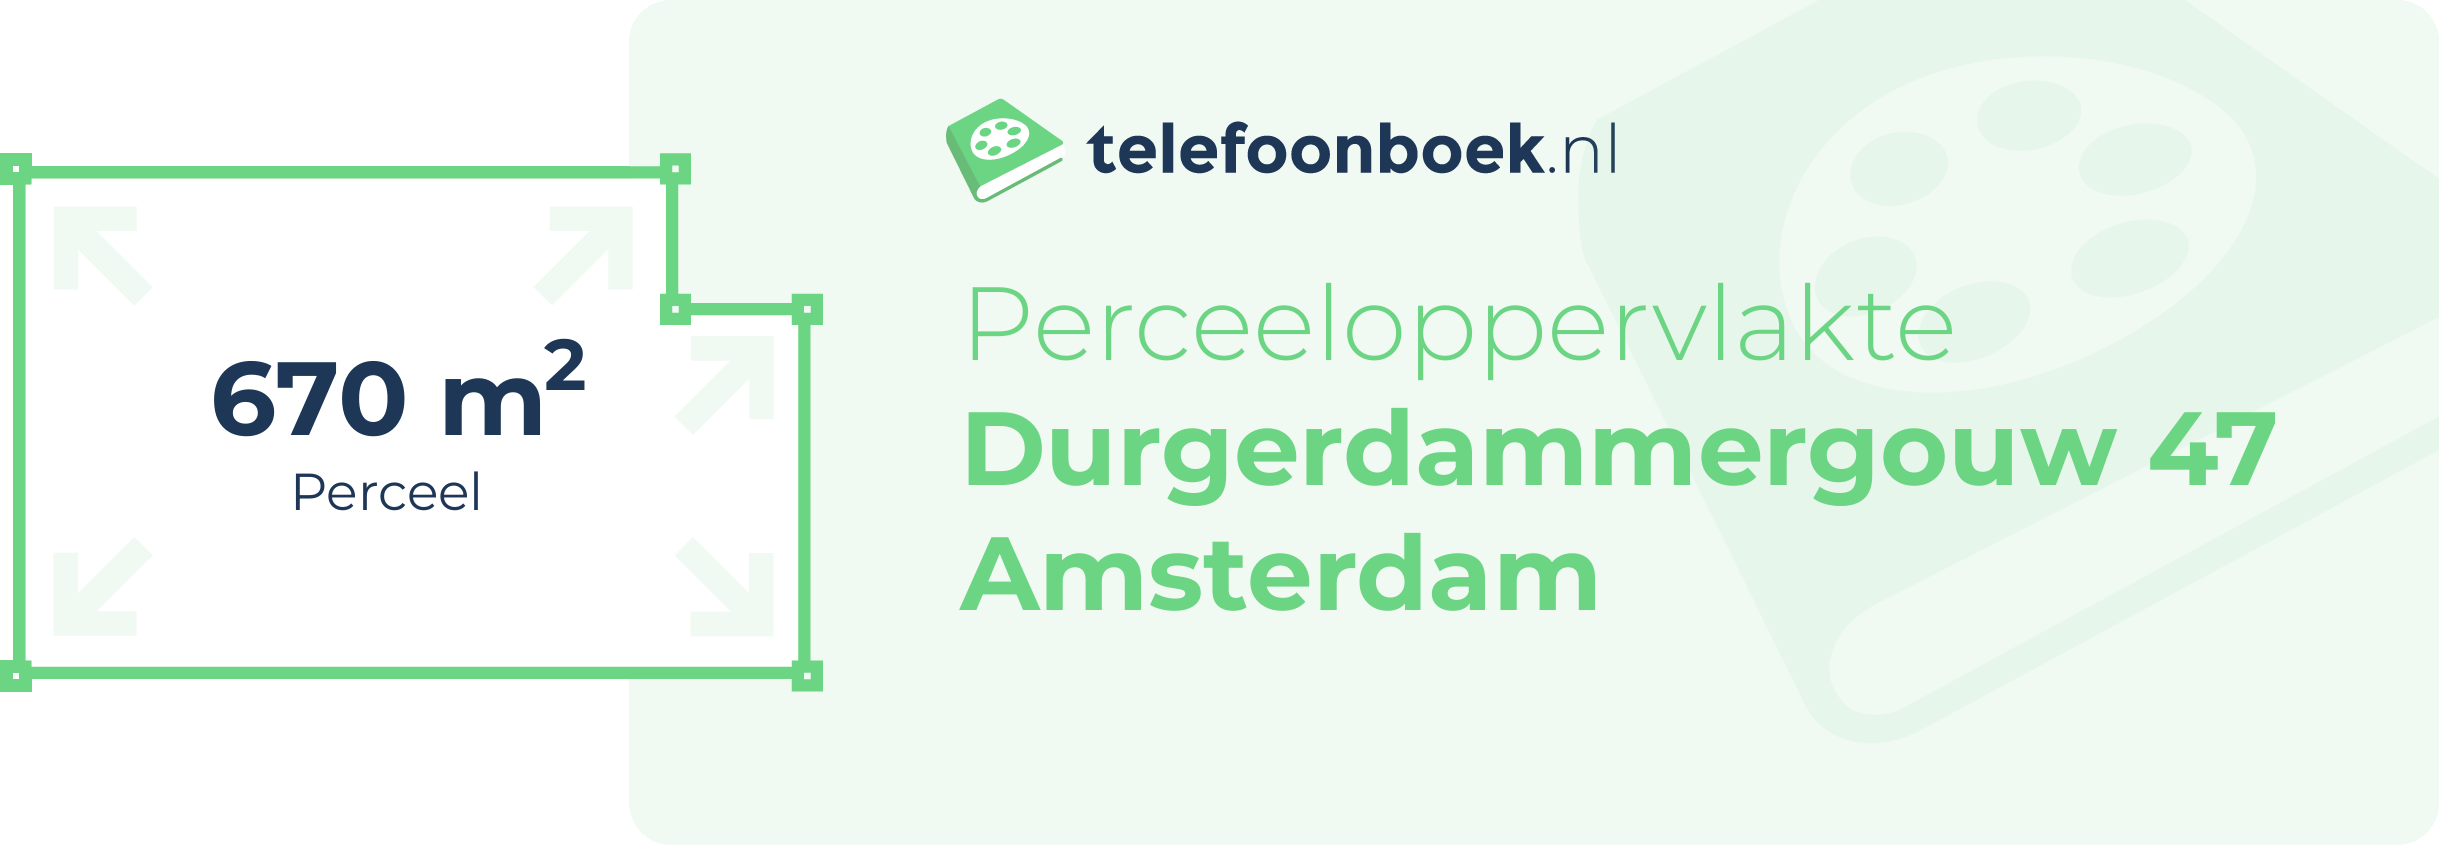 Perceeloppervlakte Durgerdammergouw 47 Amsterdam